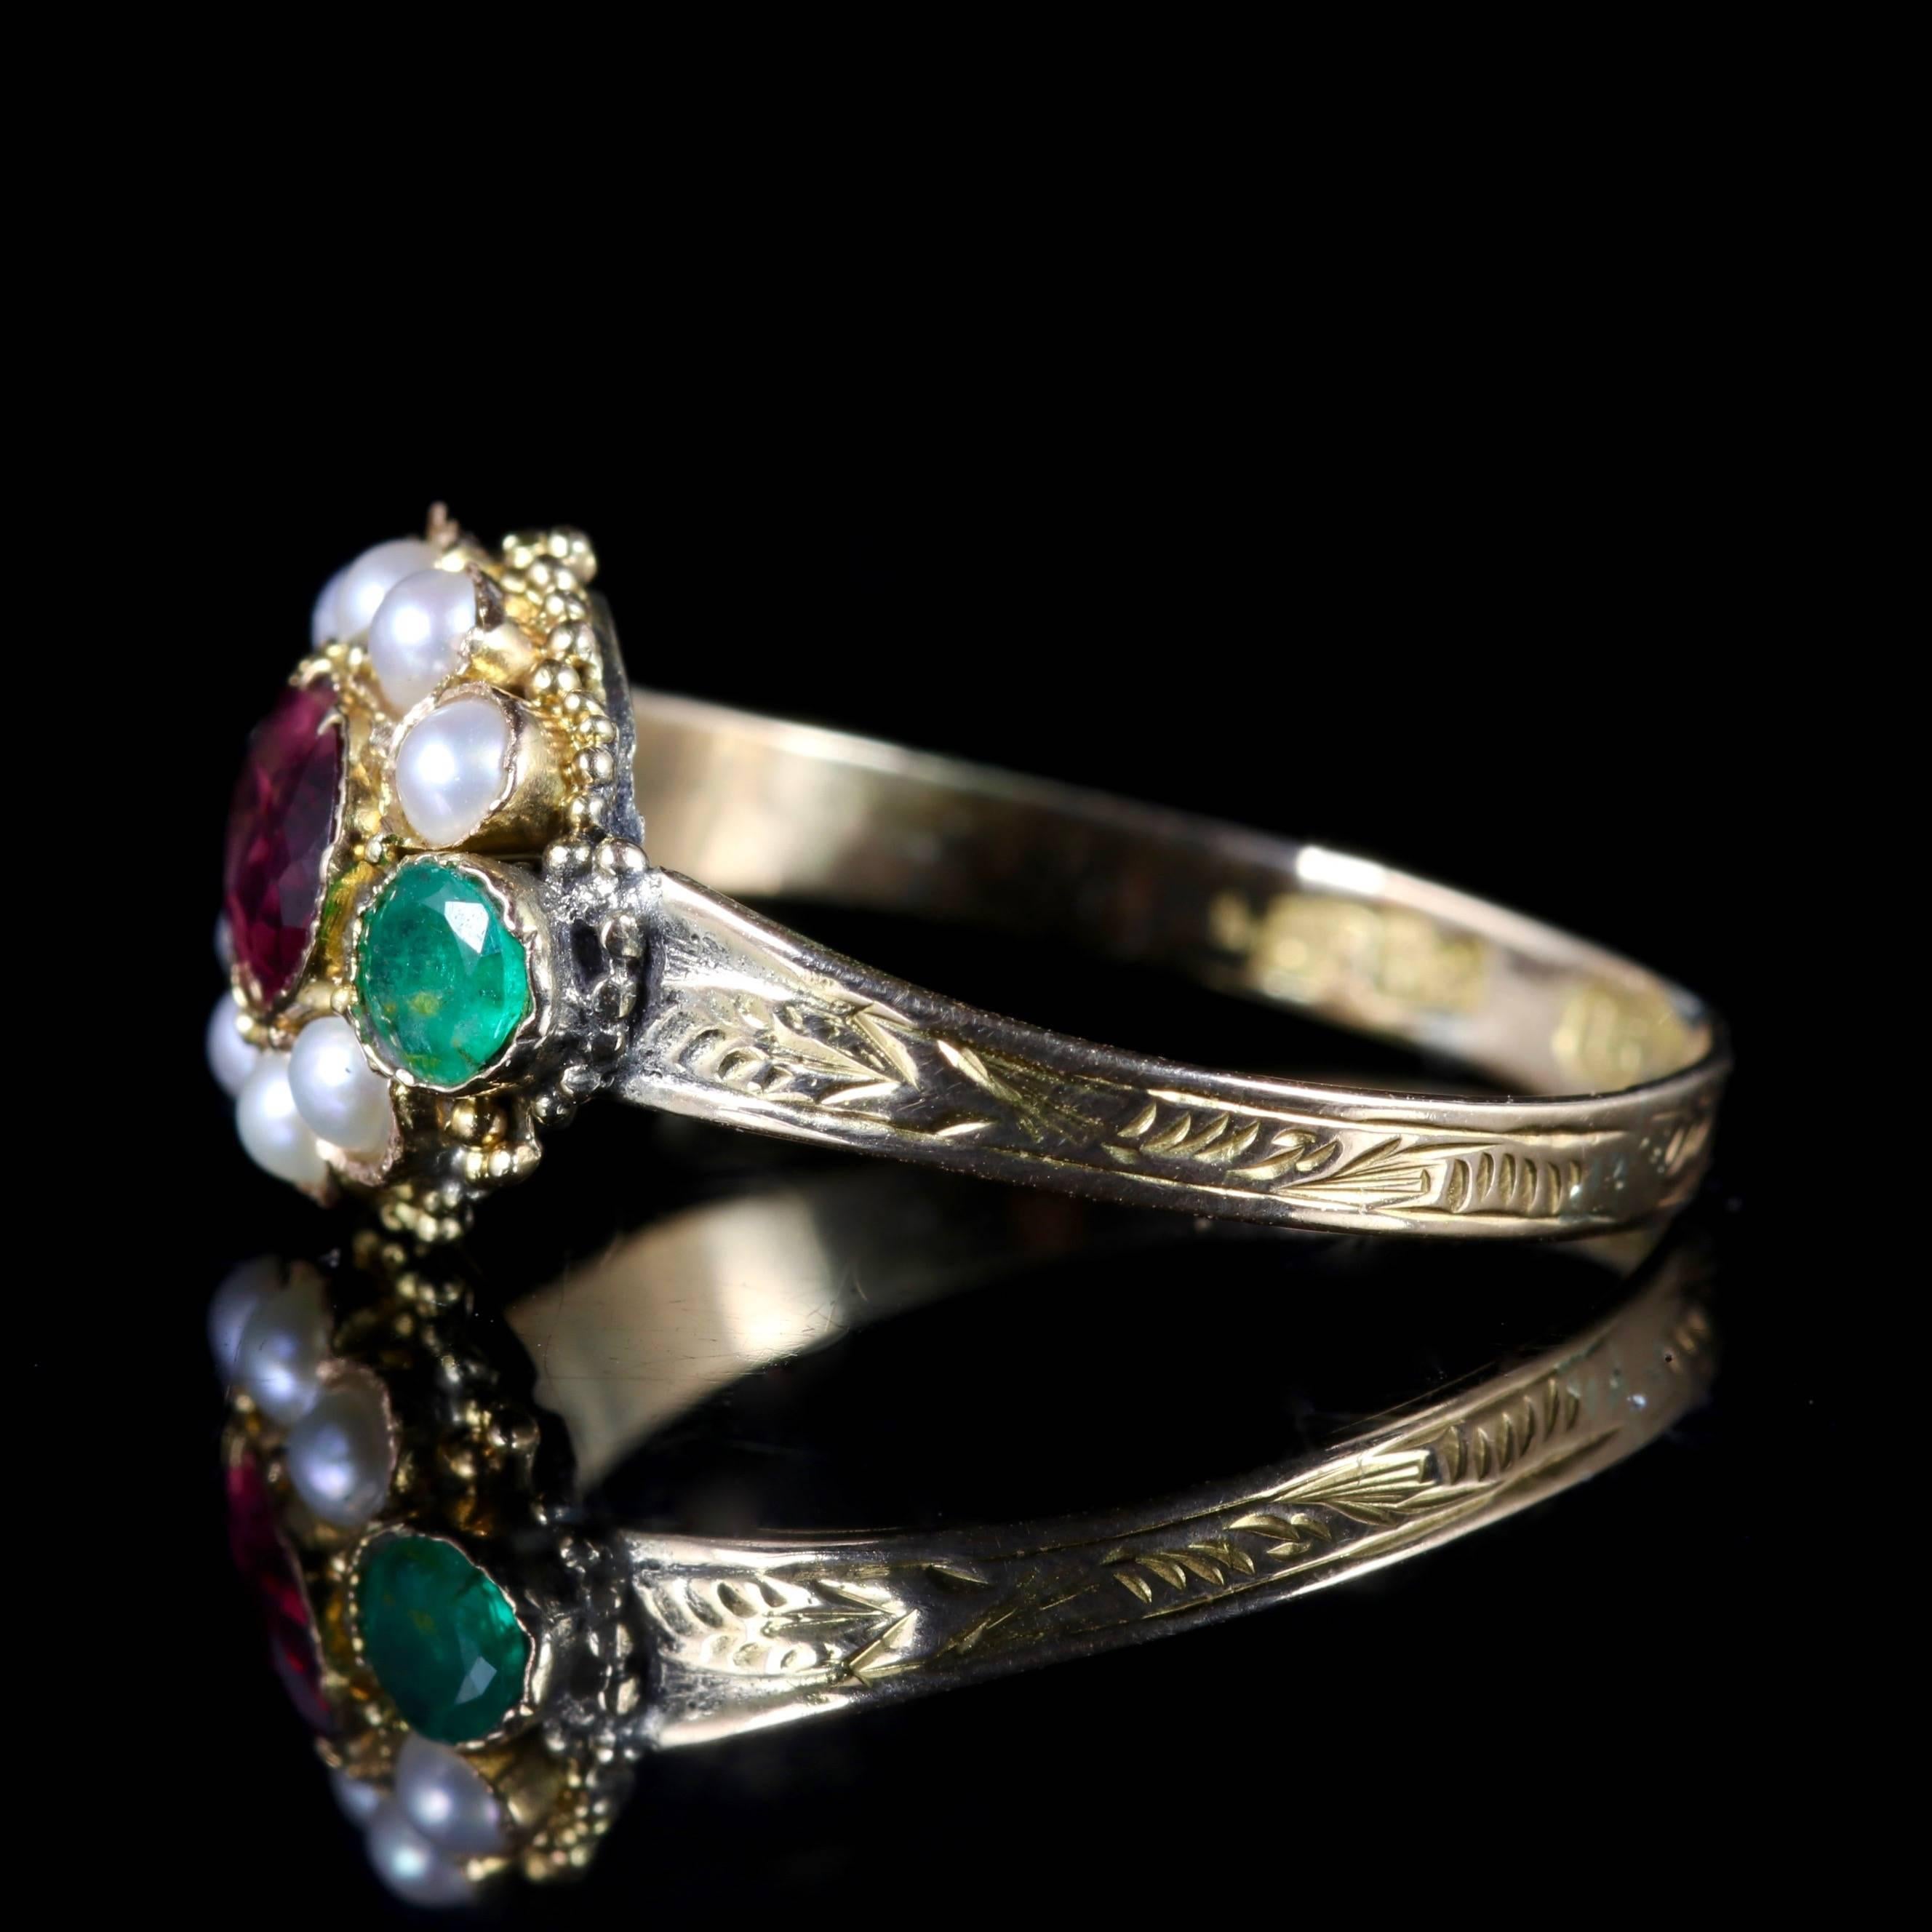 Women's Antique Georgian Almandine Garnet Emerald Pearl Ring 18 Carat Gold, circa 1800